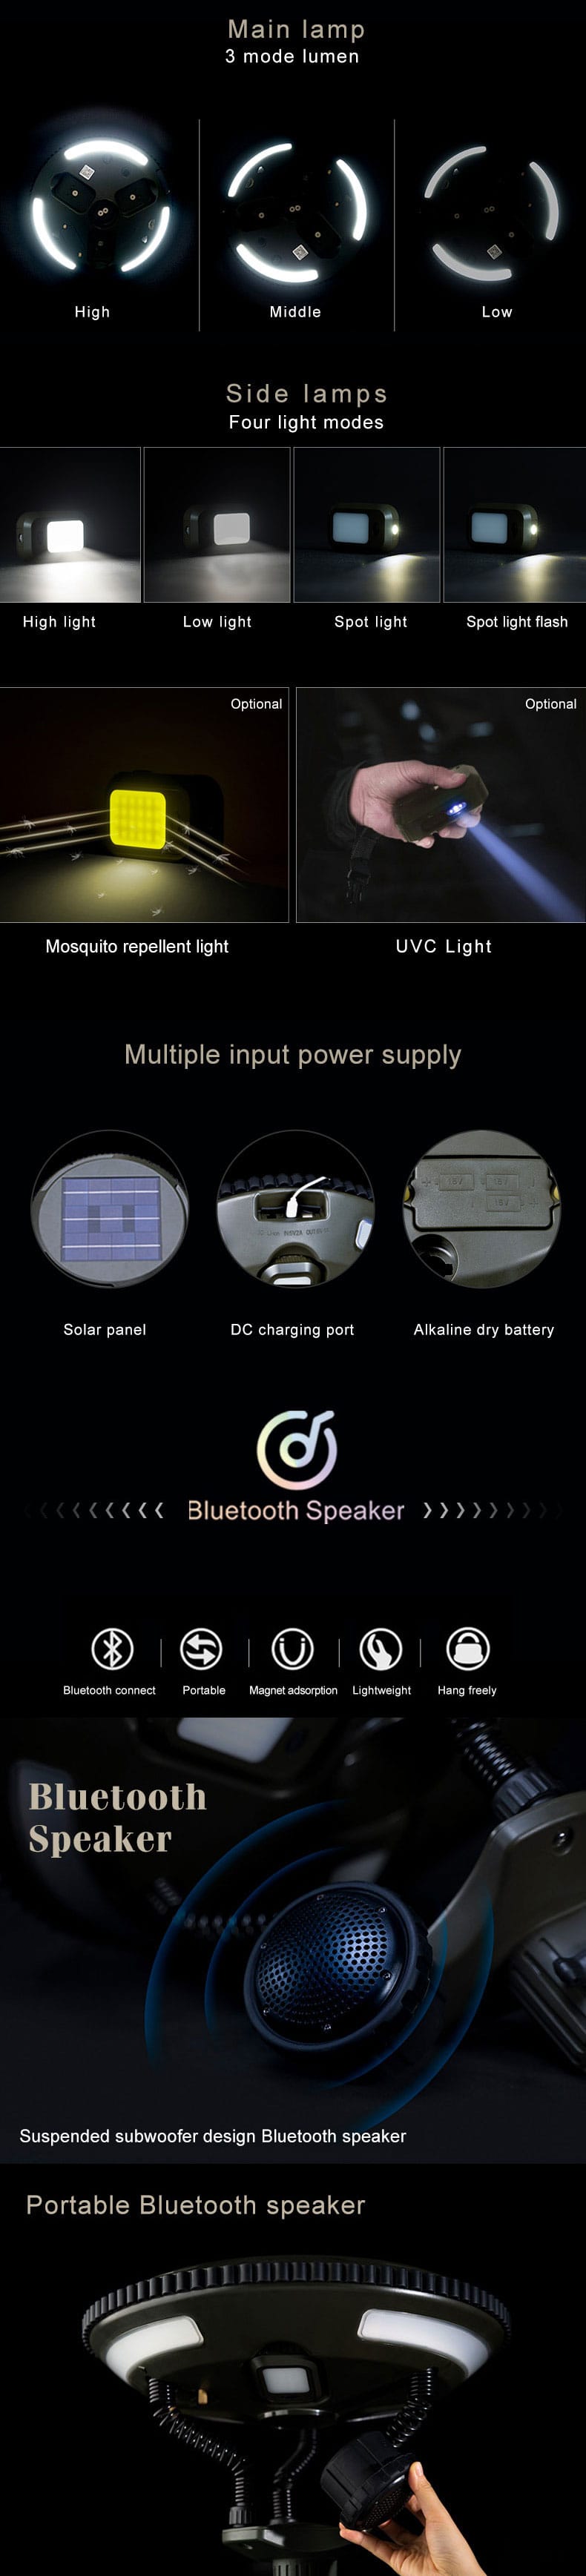 Lučka za kampiranje z zvočnikom Bluetooth (2)